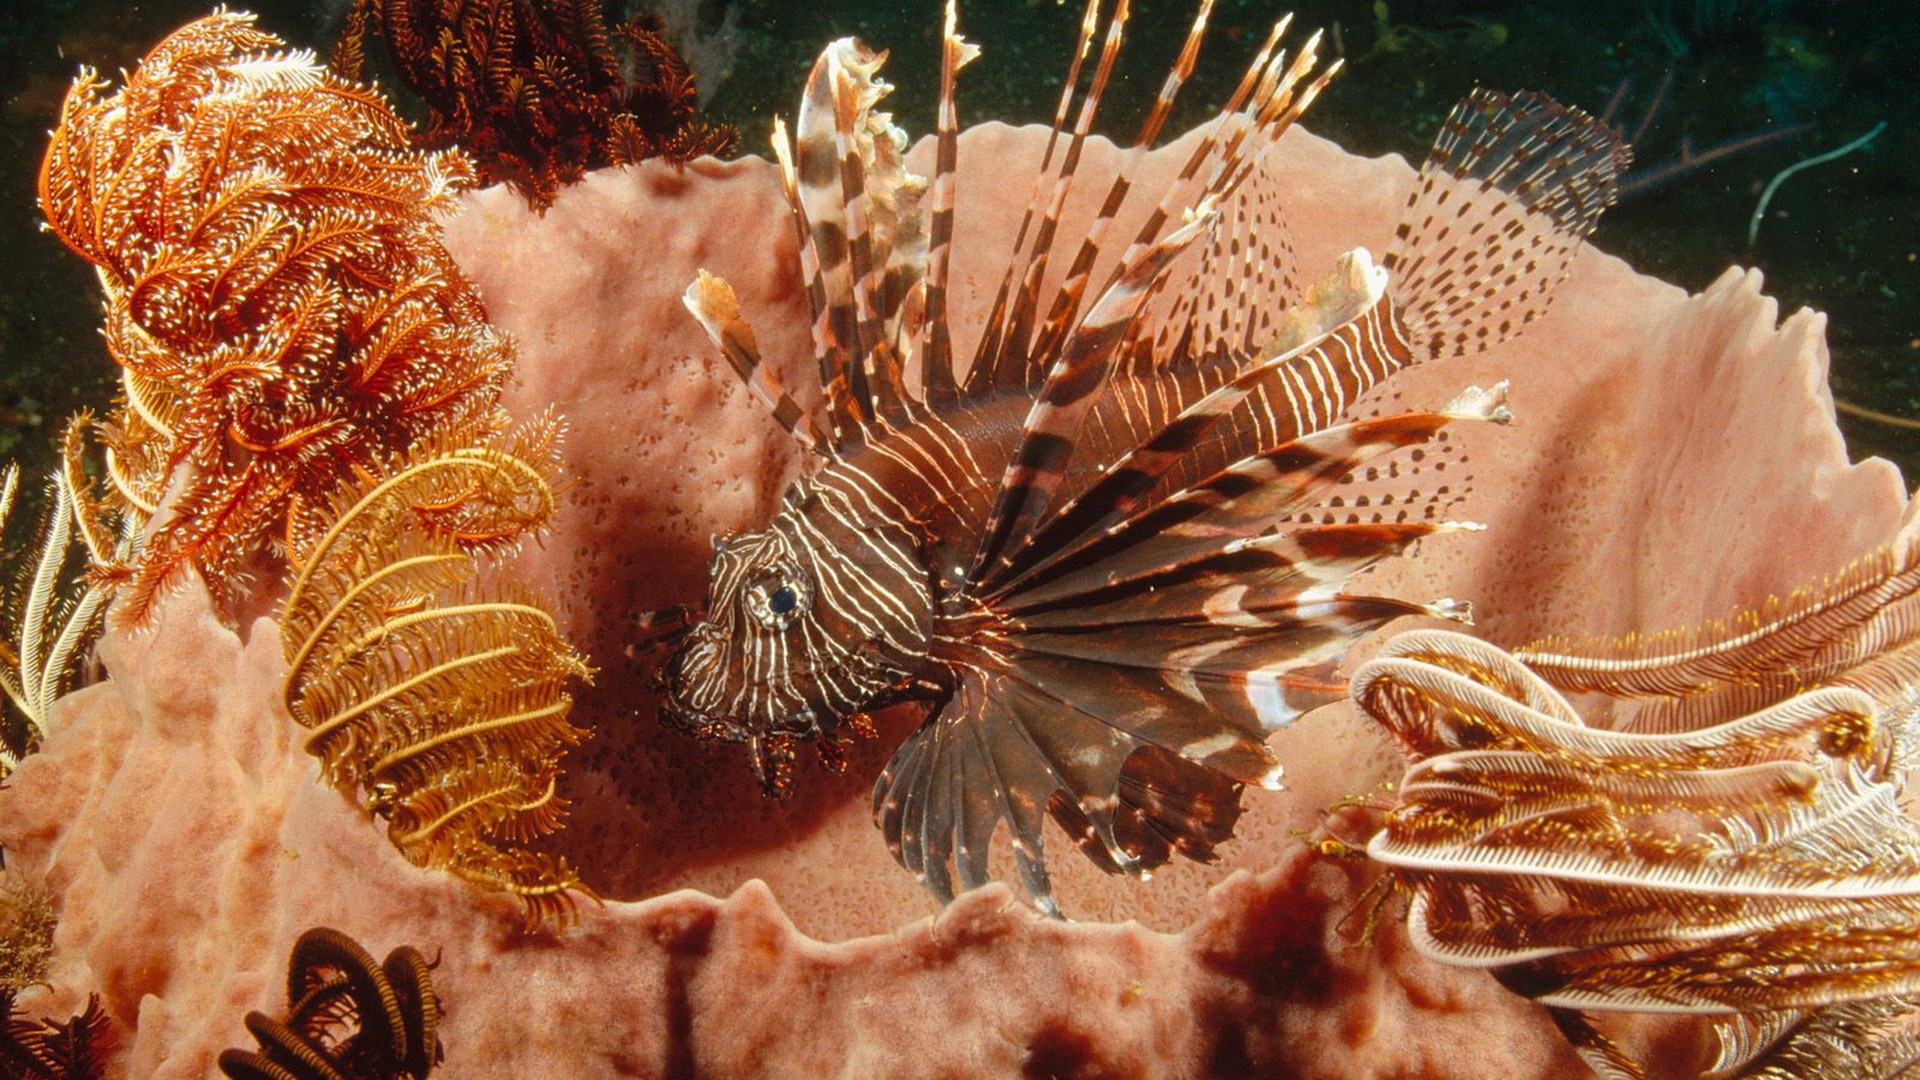 General 1920x1080 lionfish coral nature sea brown underwater fish animals